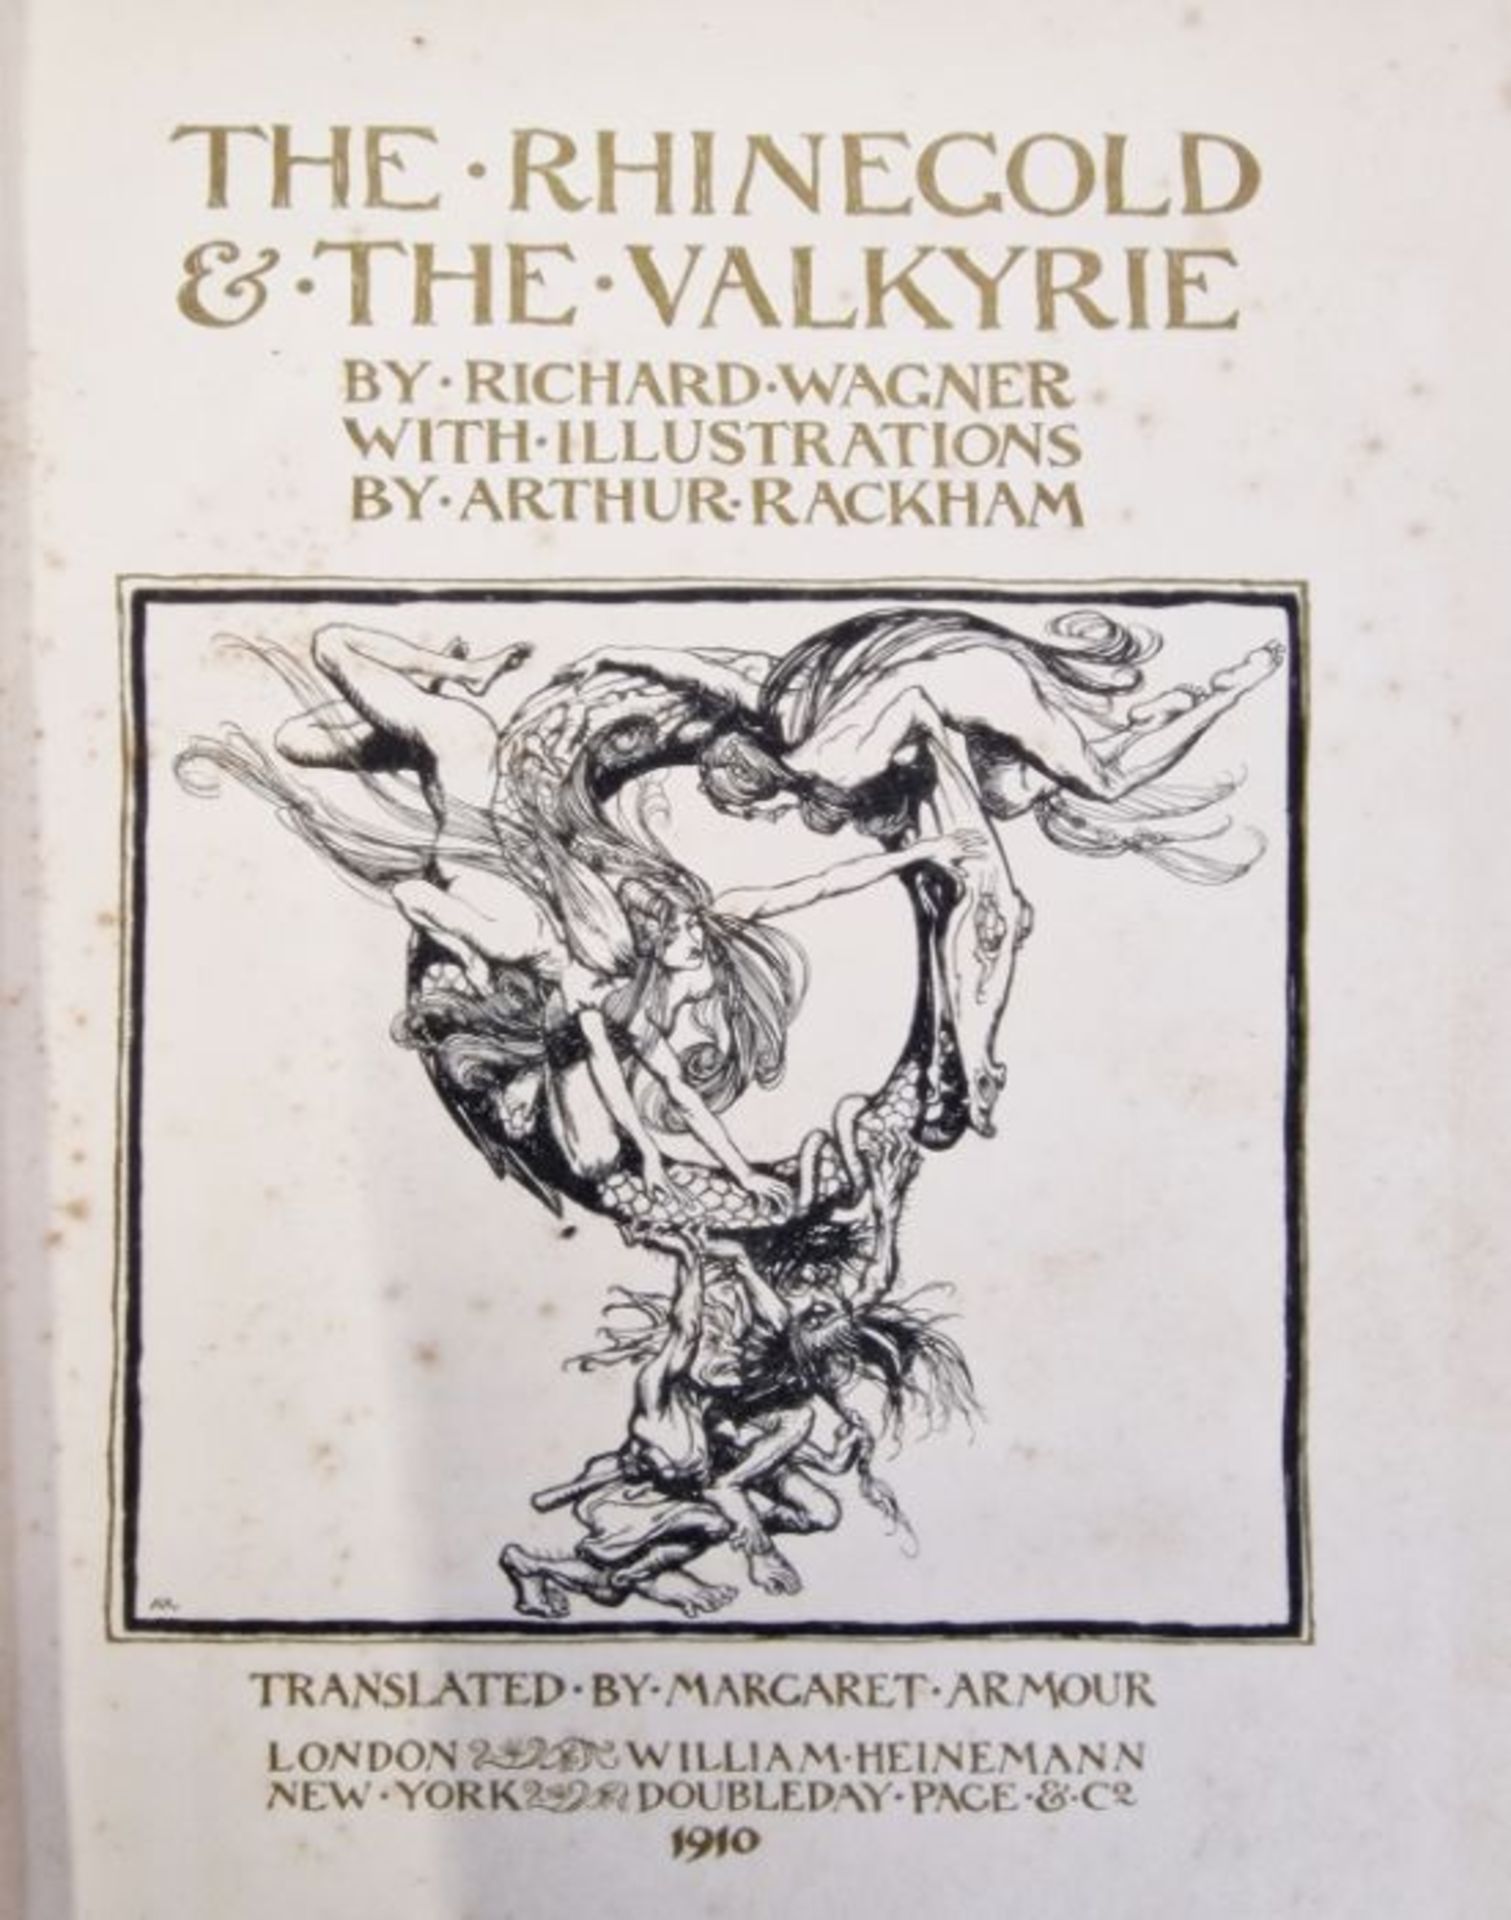 Rackham Arthur ( ills.) ' The Rhinegold & the Valkyrie'  William Heinemann 1910 - col plates - Image 11 of 32